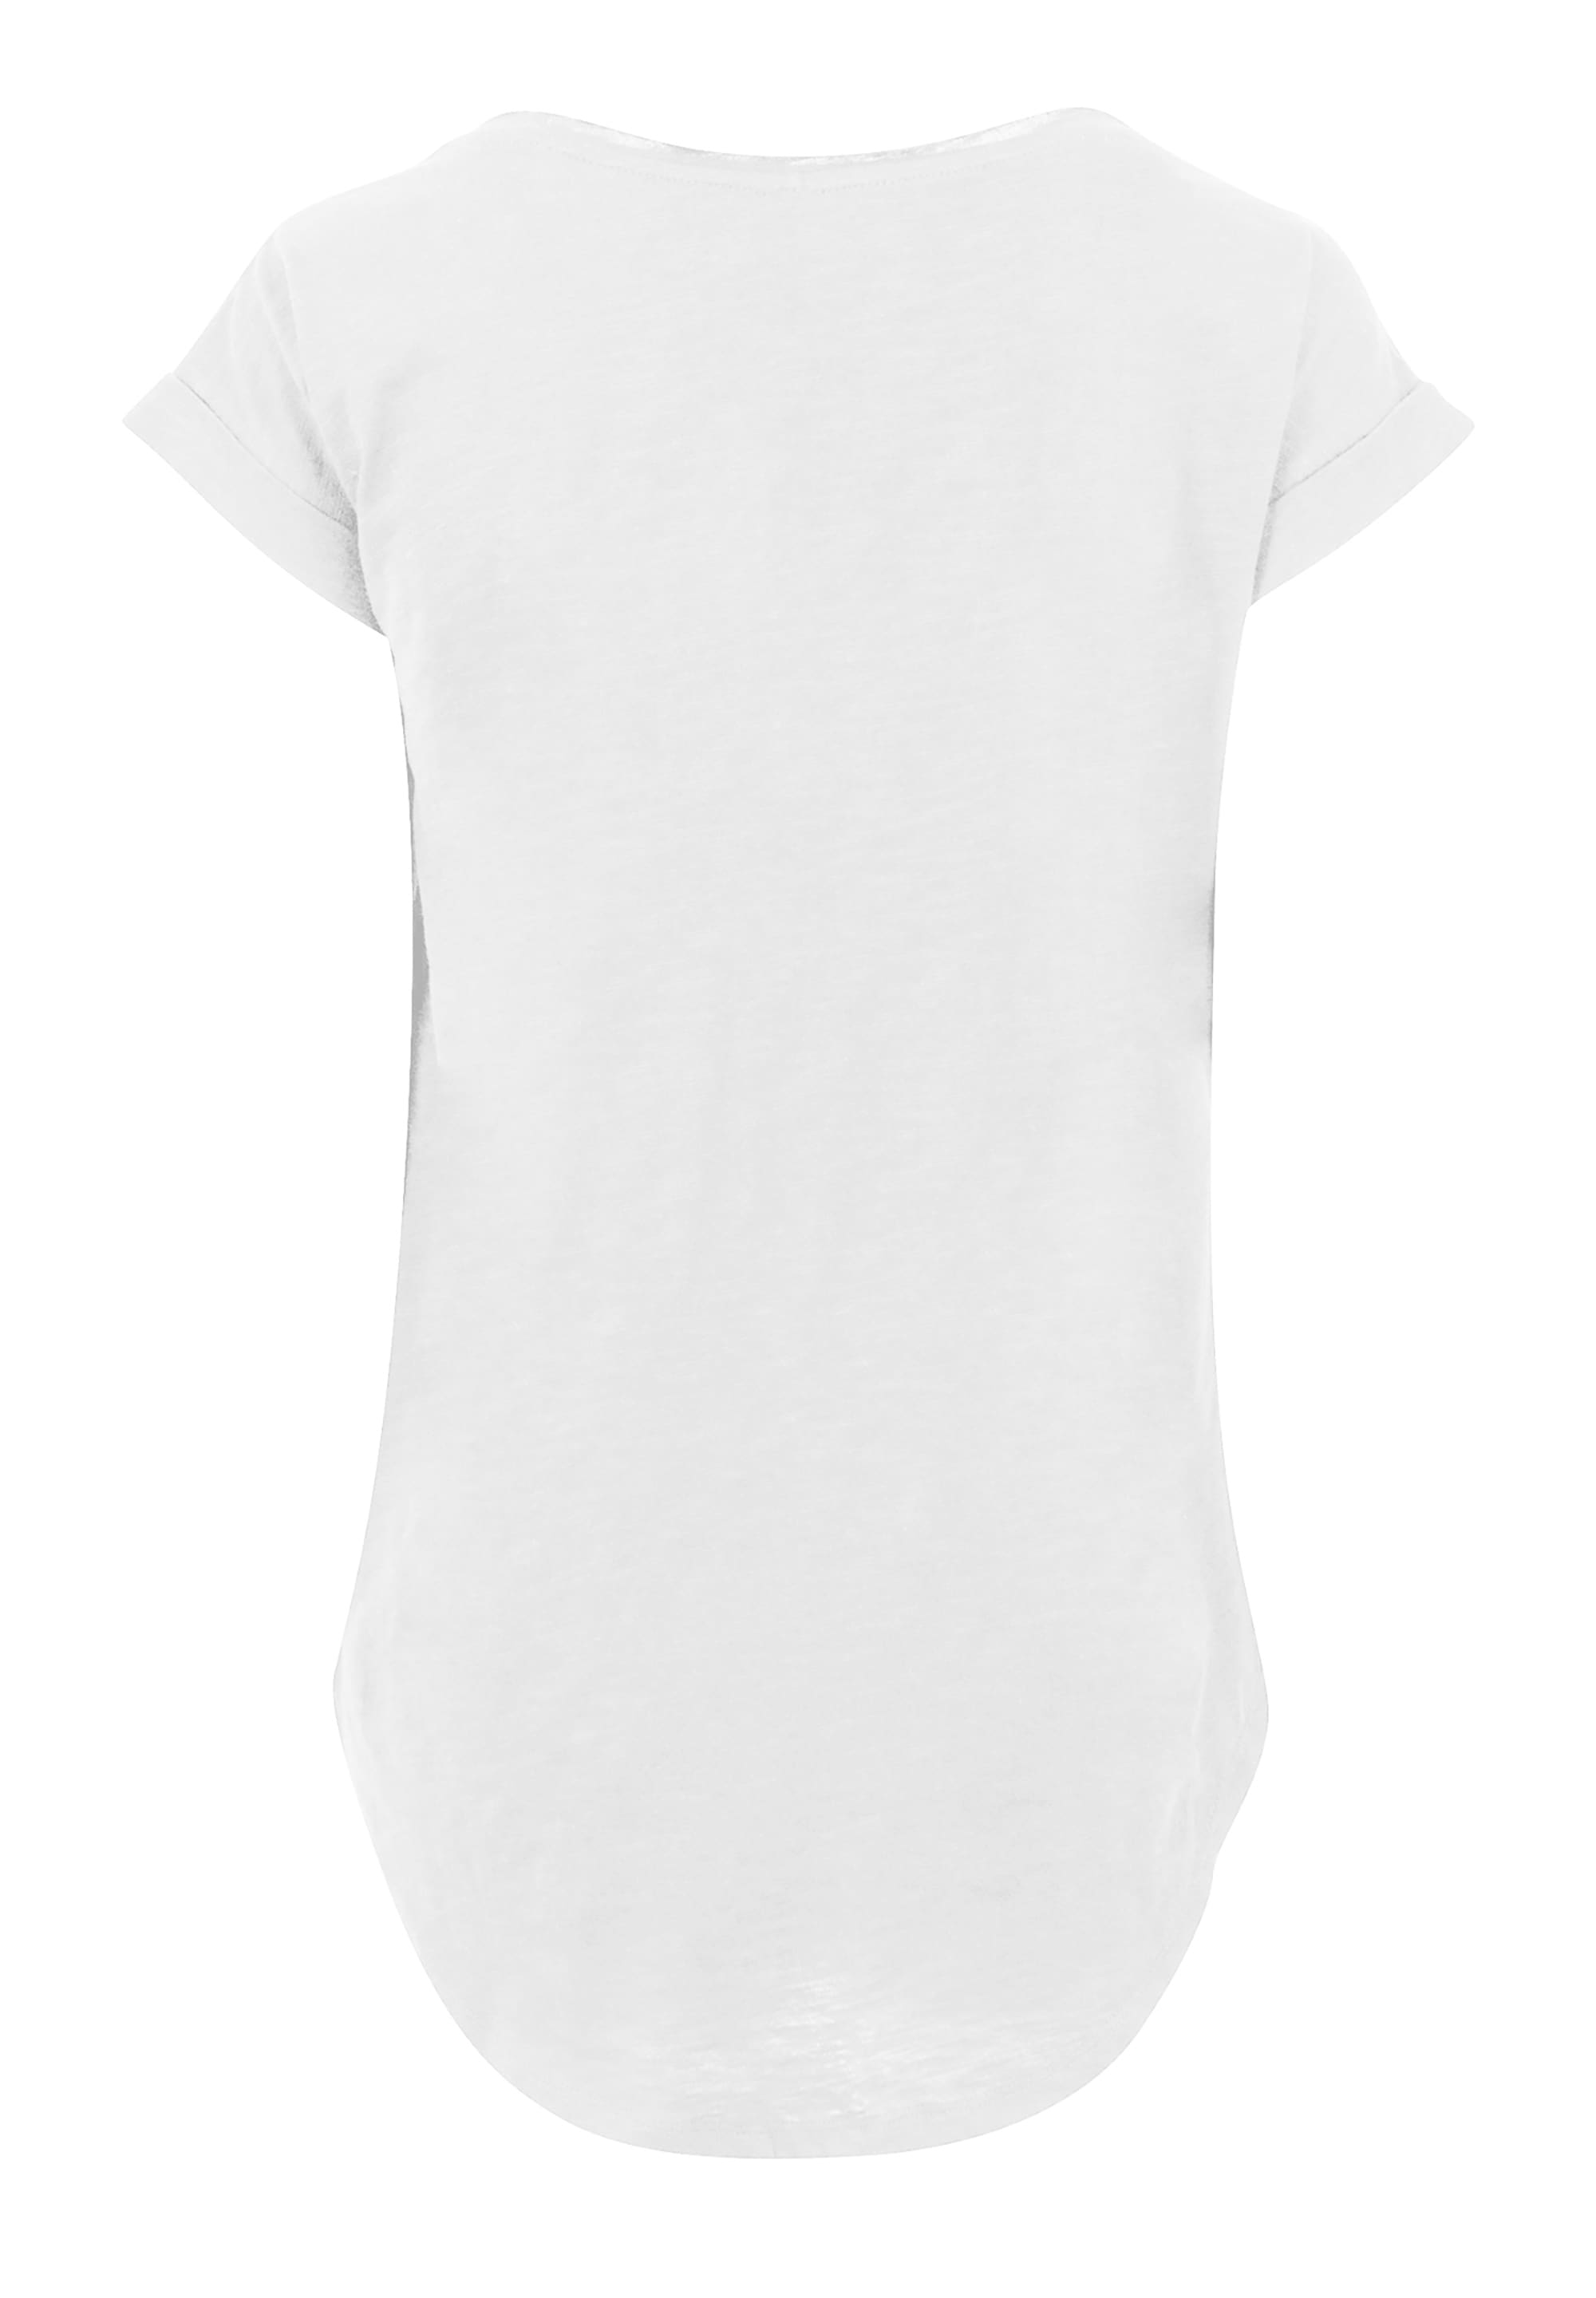 F4NT4STIC T-Shirt »ACDC Back In Black Logo Ladies Long T-Shirt«, Print